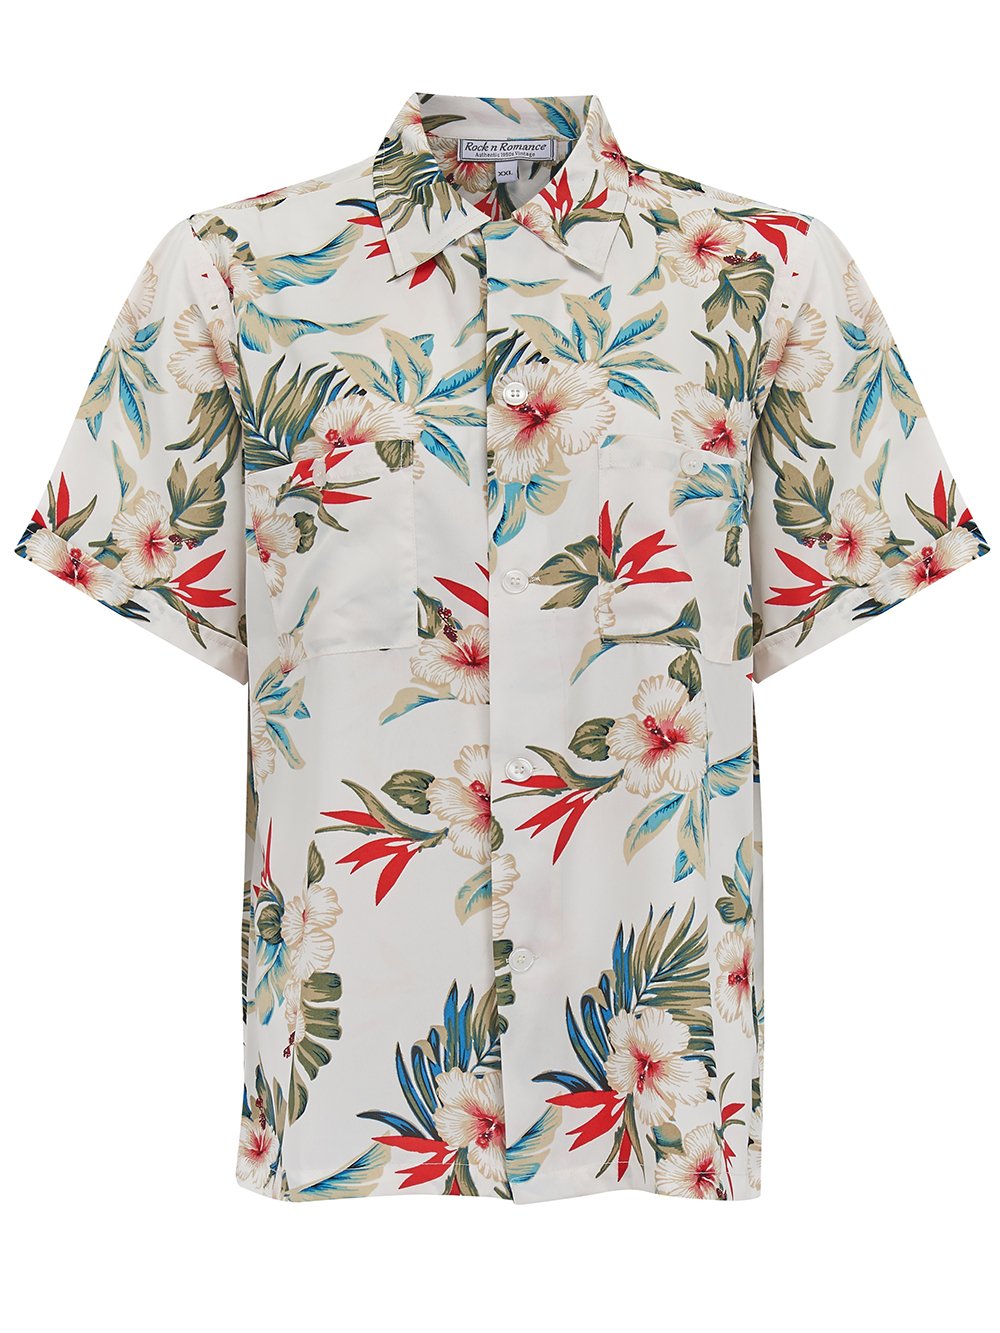 Unisex 1950s Style Hawaiian / Bowling Shirt - RocknRomance True 1940s & 1950s Vintage Style